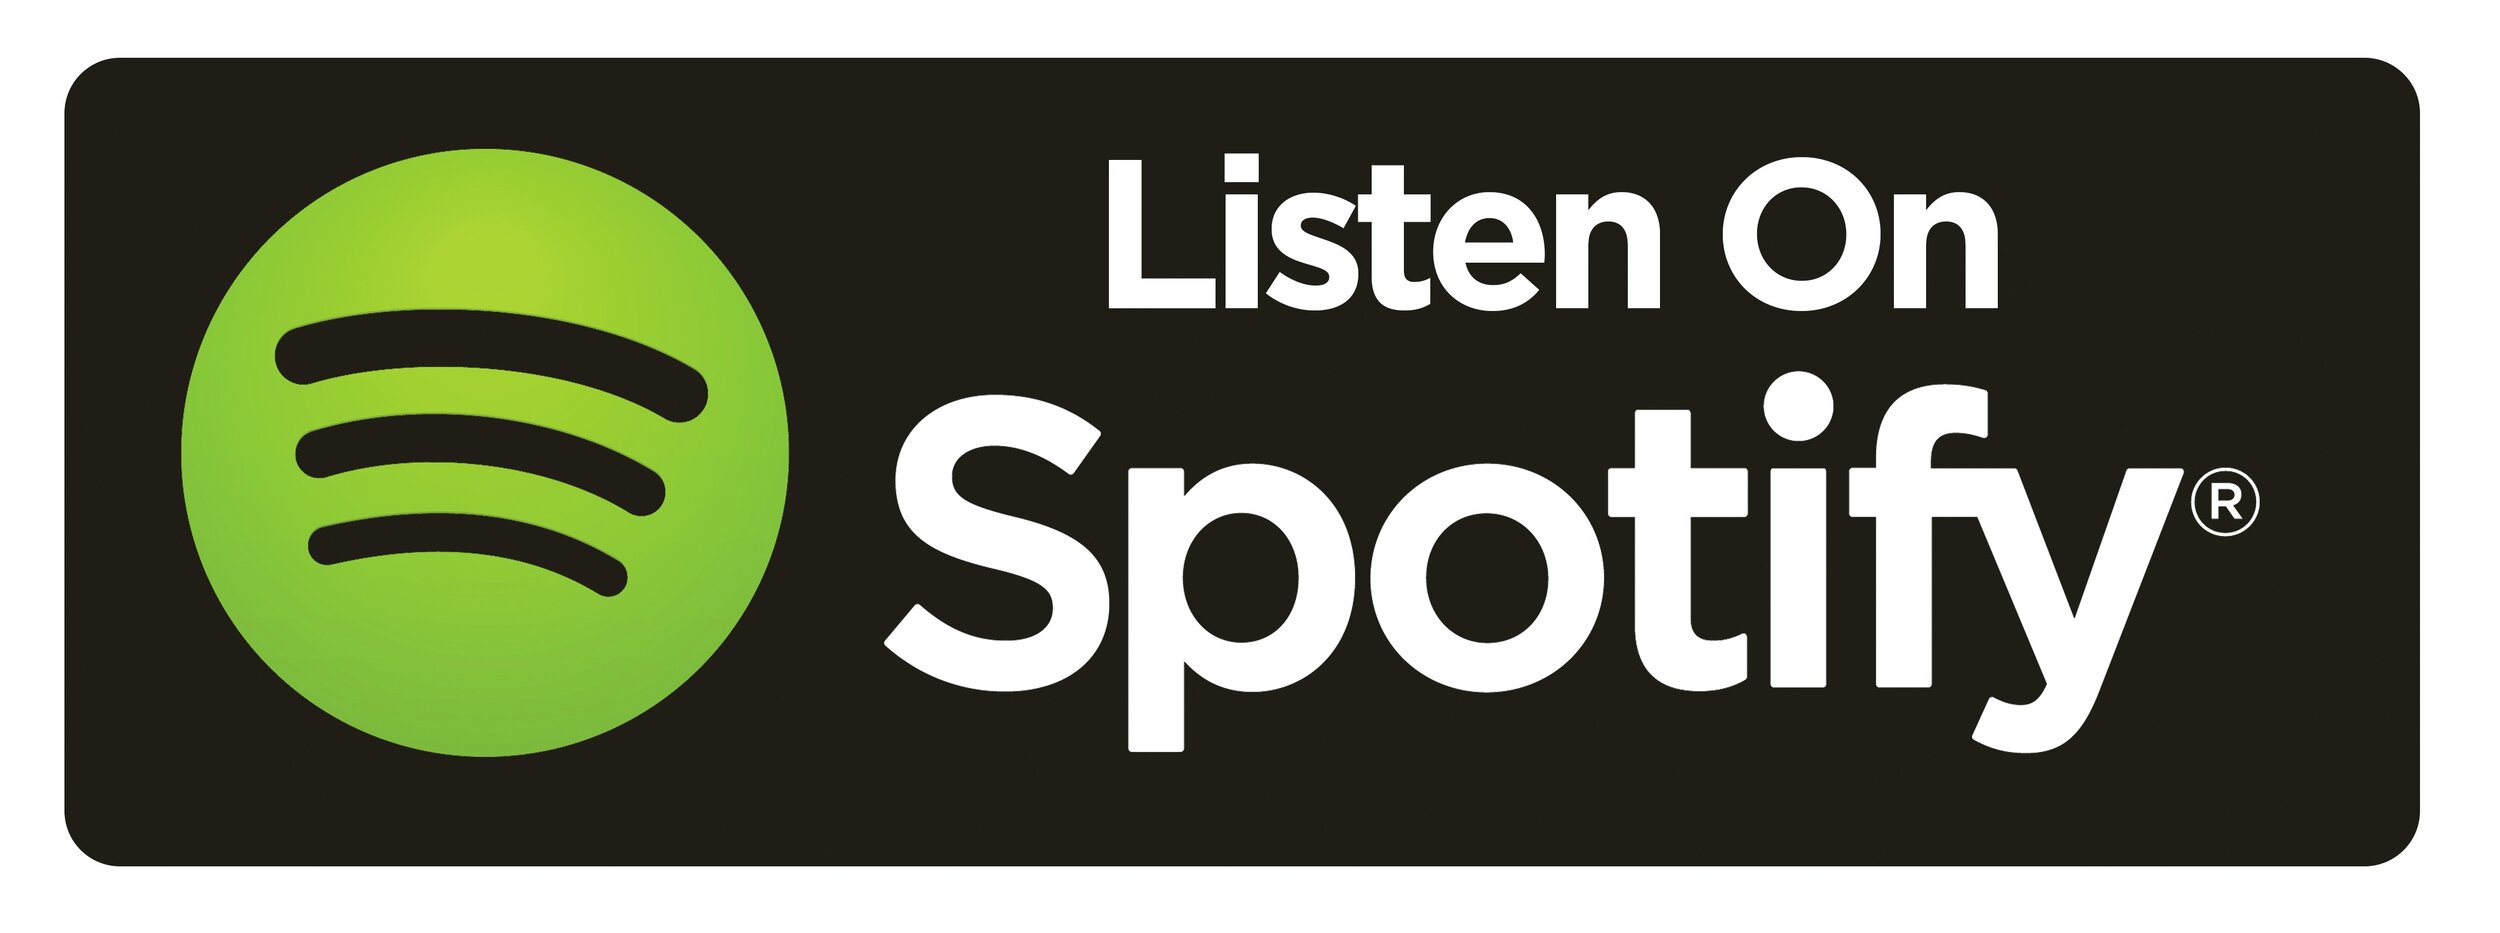 Escuchar en Spotify-botón.jpg